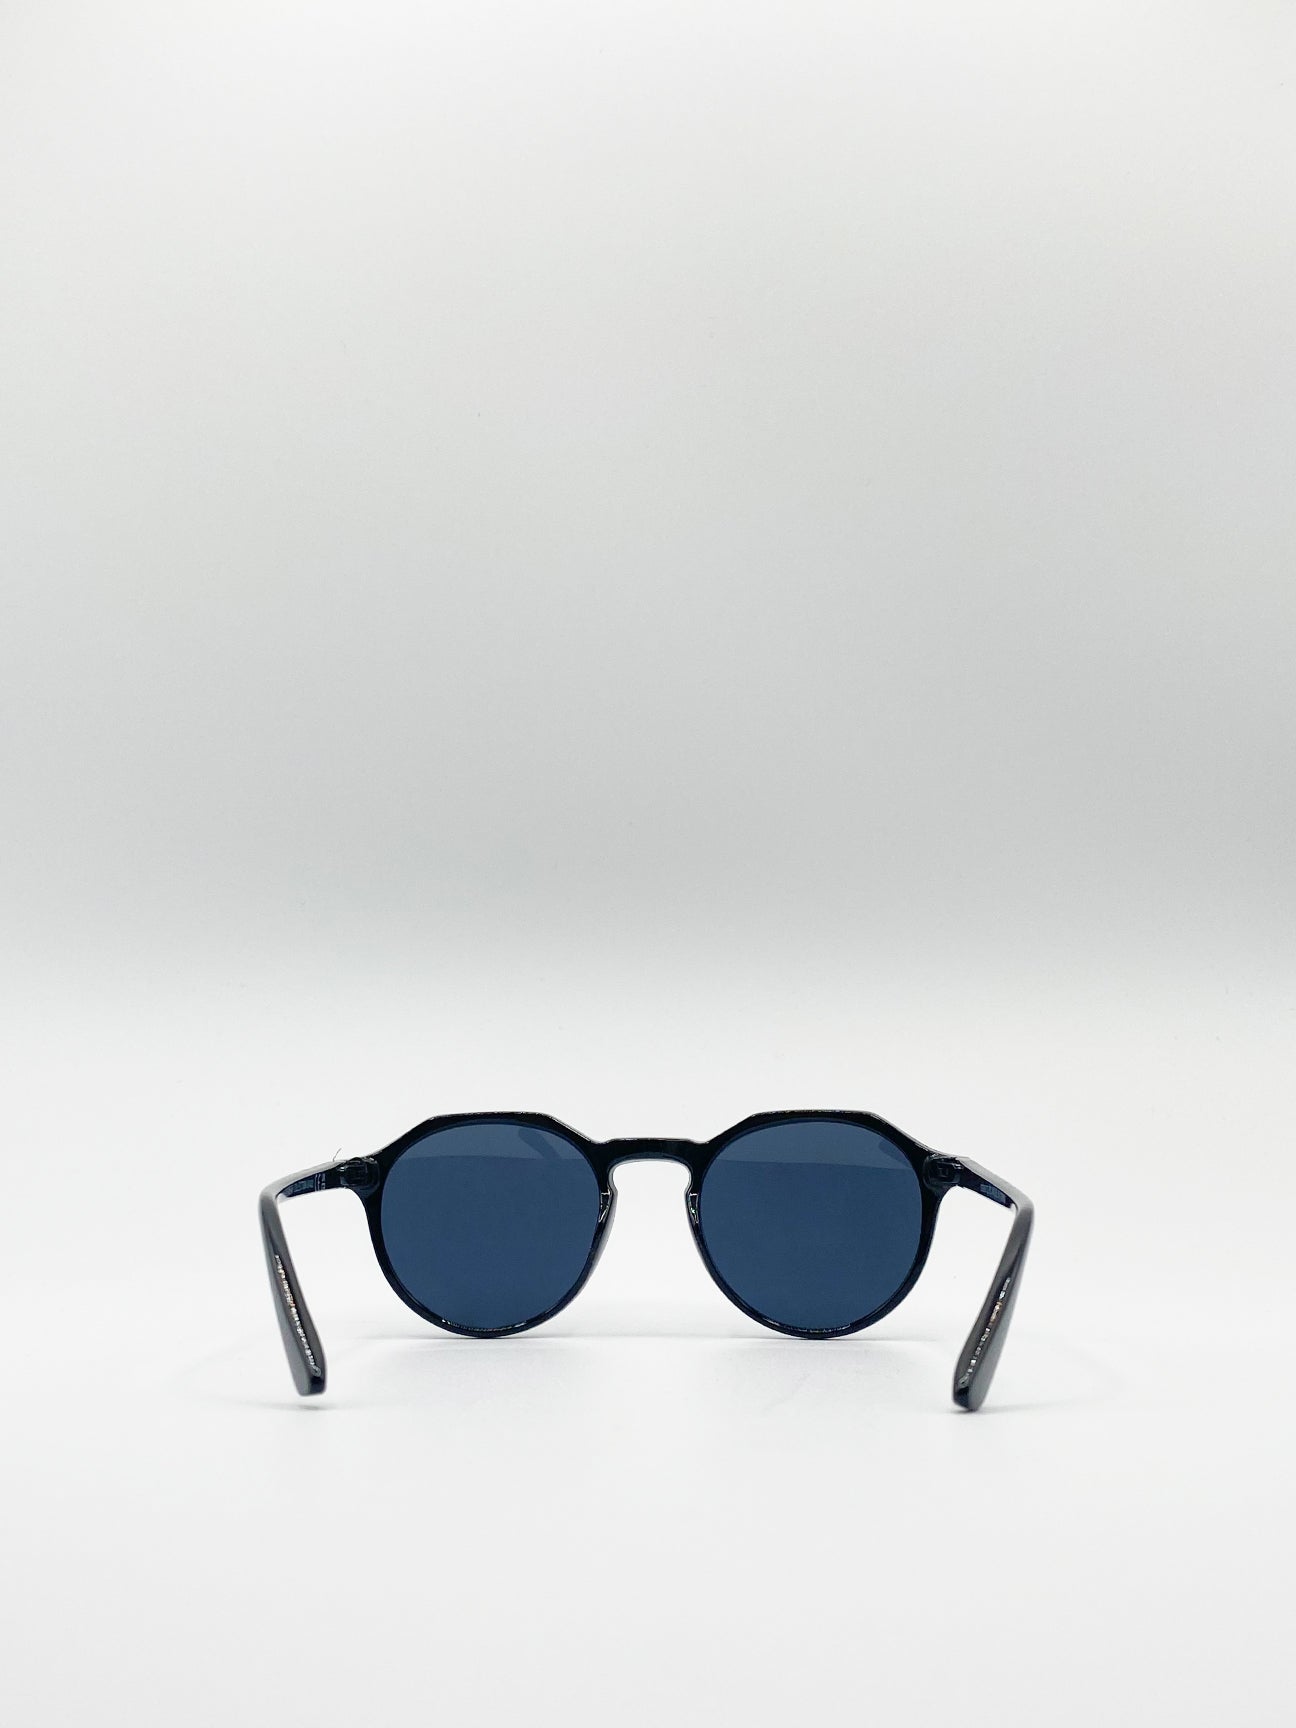 Black Classic Preppy Sunglasses With Key Hole Nosebridge